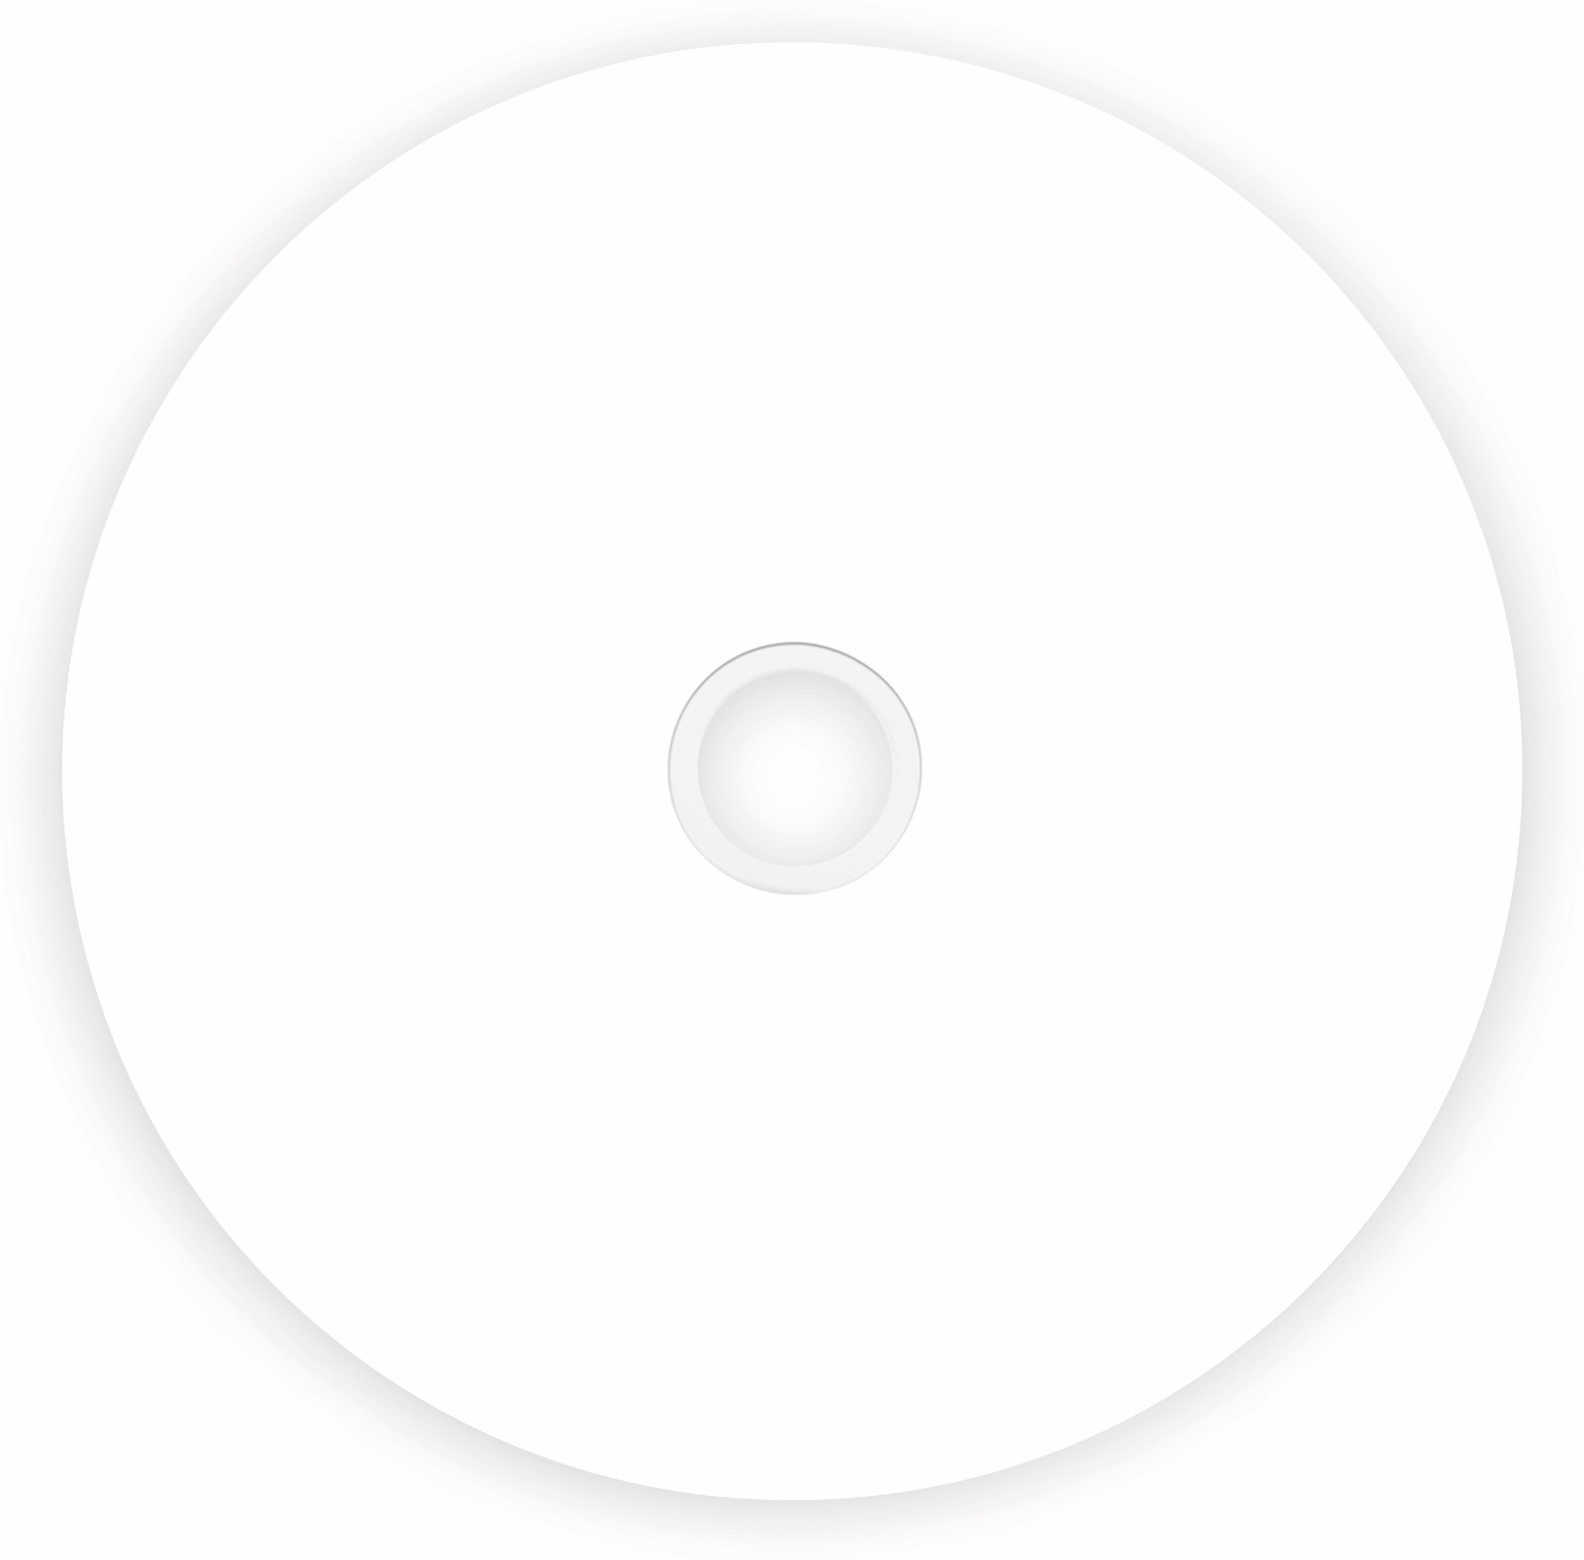 VERBATIM M-Disc BD-R, 25 GB, 5 Stück, Bedruckbar